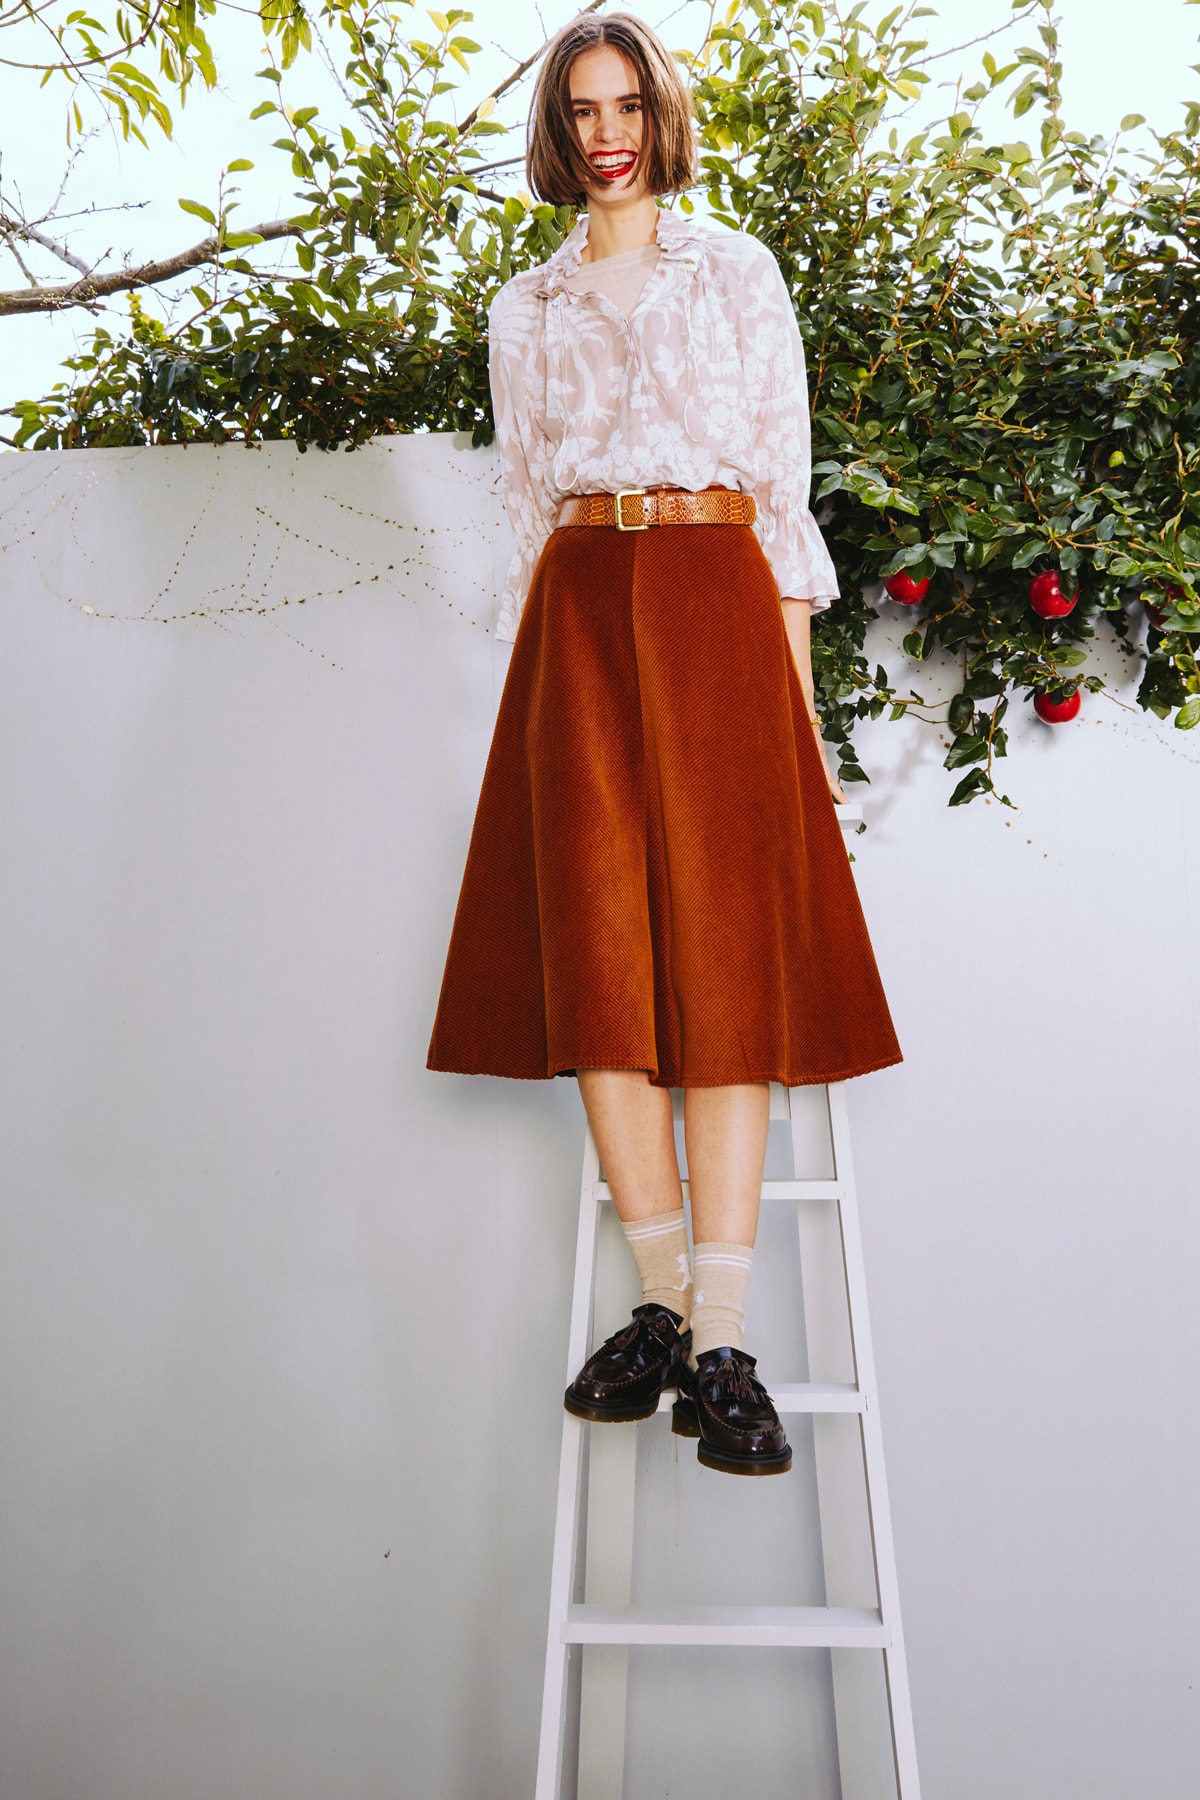 Karen Walker 2018 Spring Summer NYFW Lookbook Floral Top Cream Tan Skirt Brown